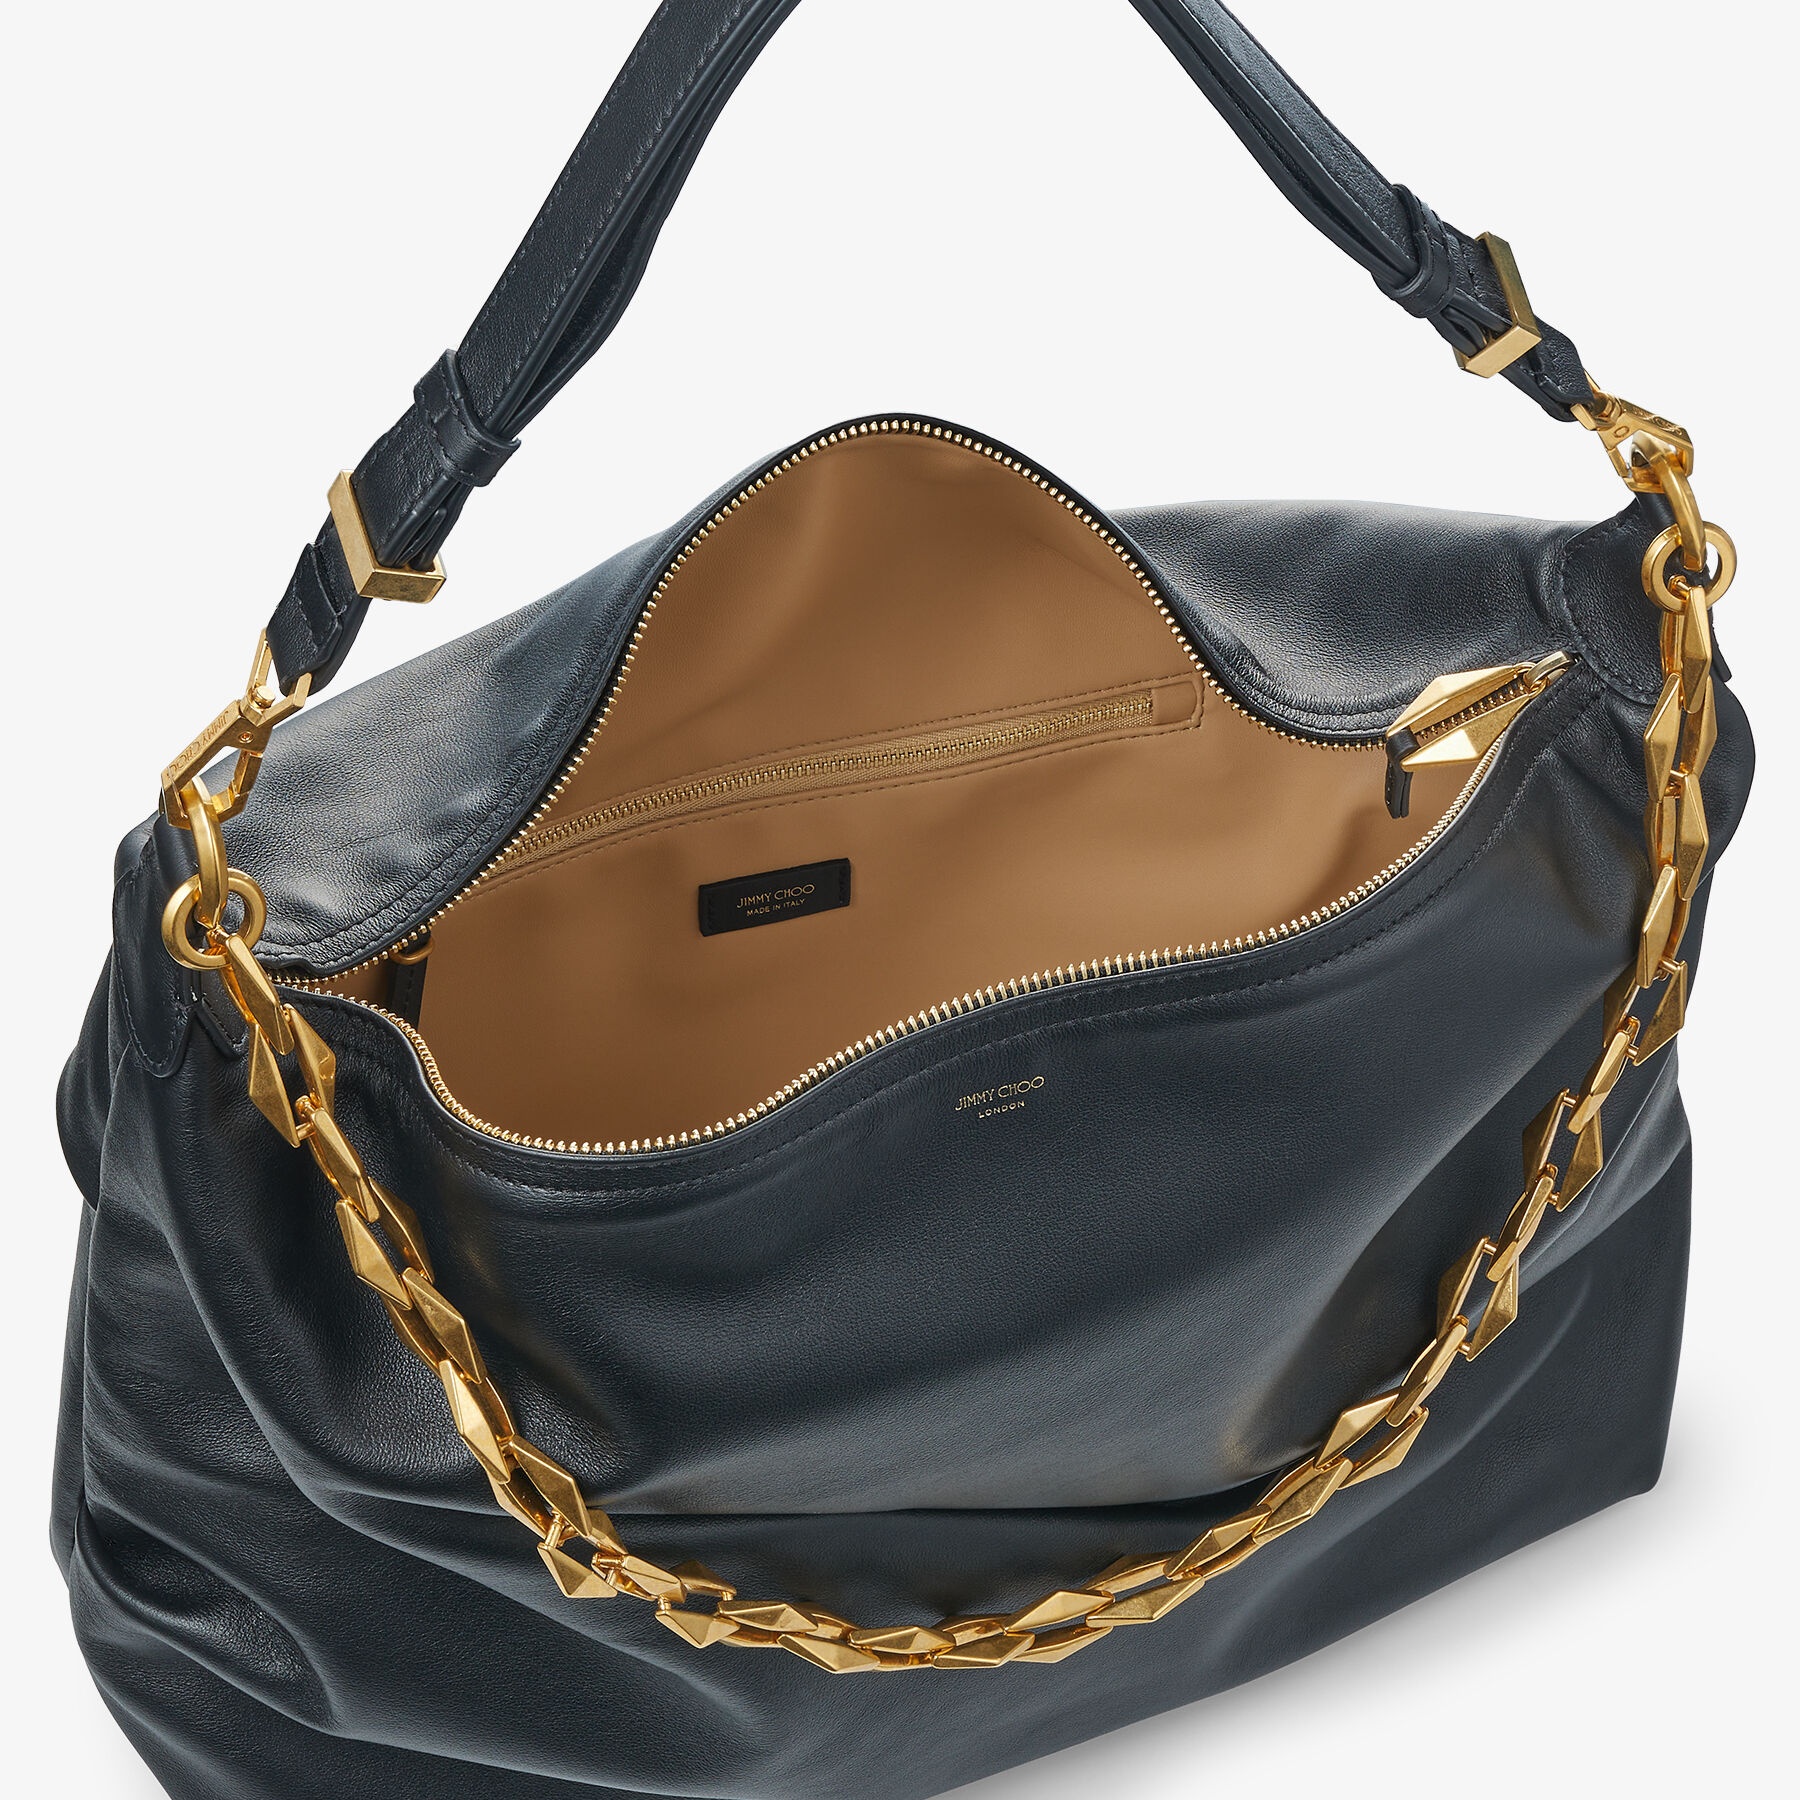 Diamond Soft Hobo M
Black Soft Calf Leather Hobo Bag with Chain Strap - 7